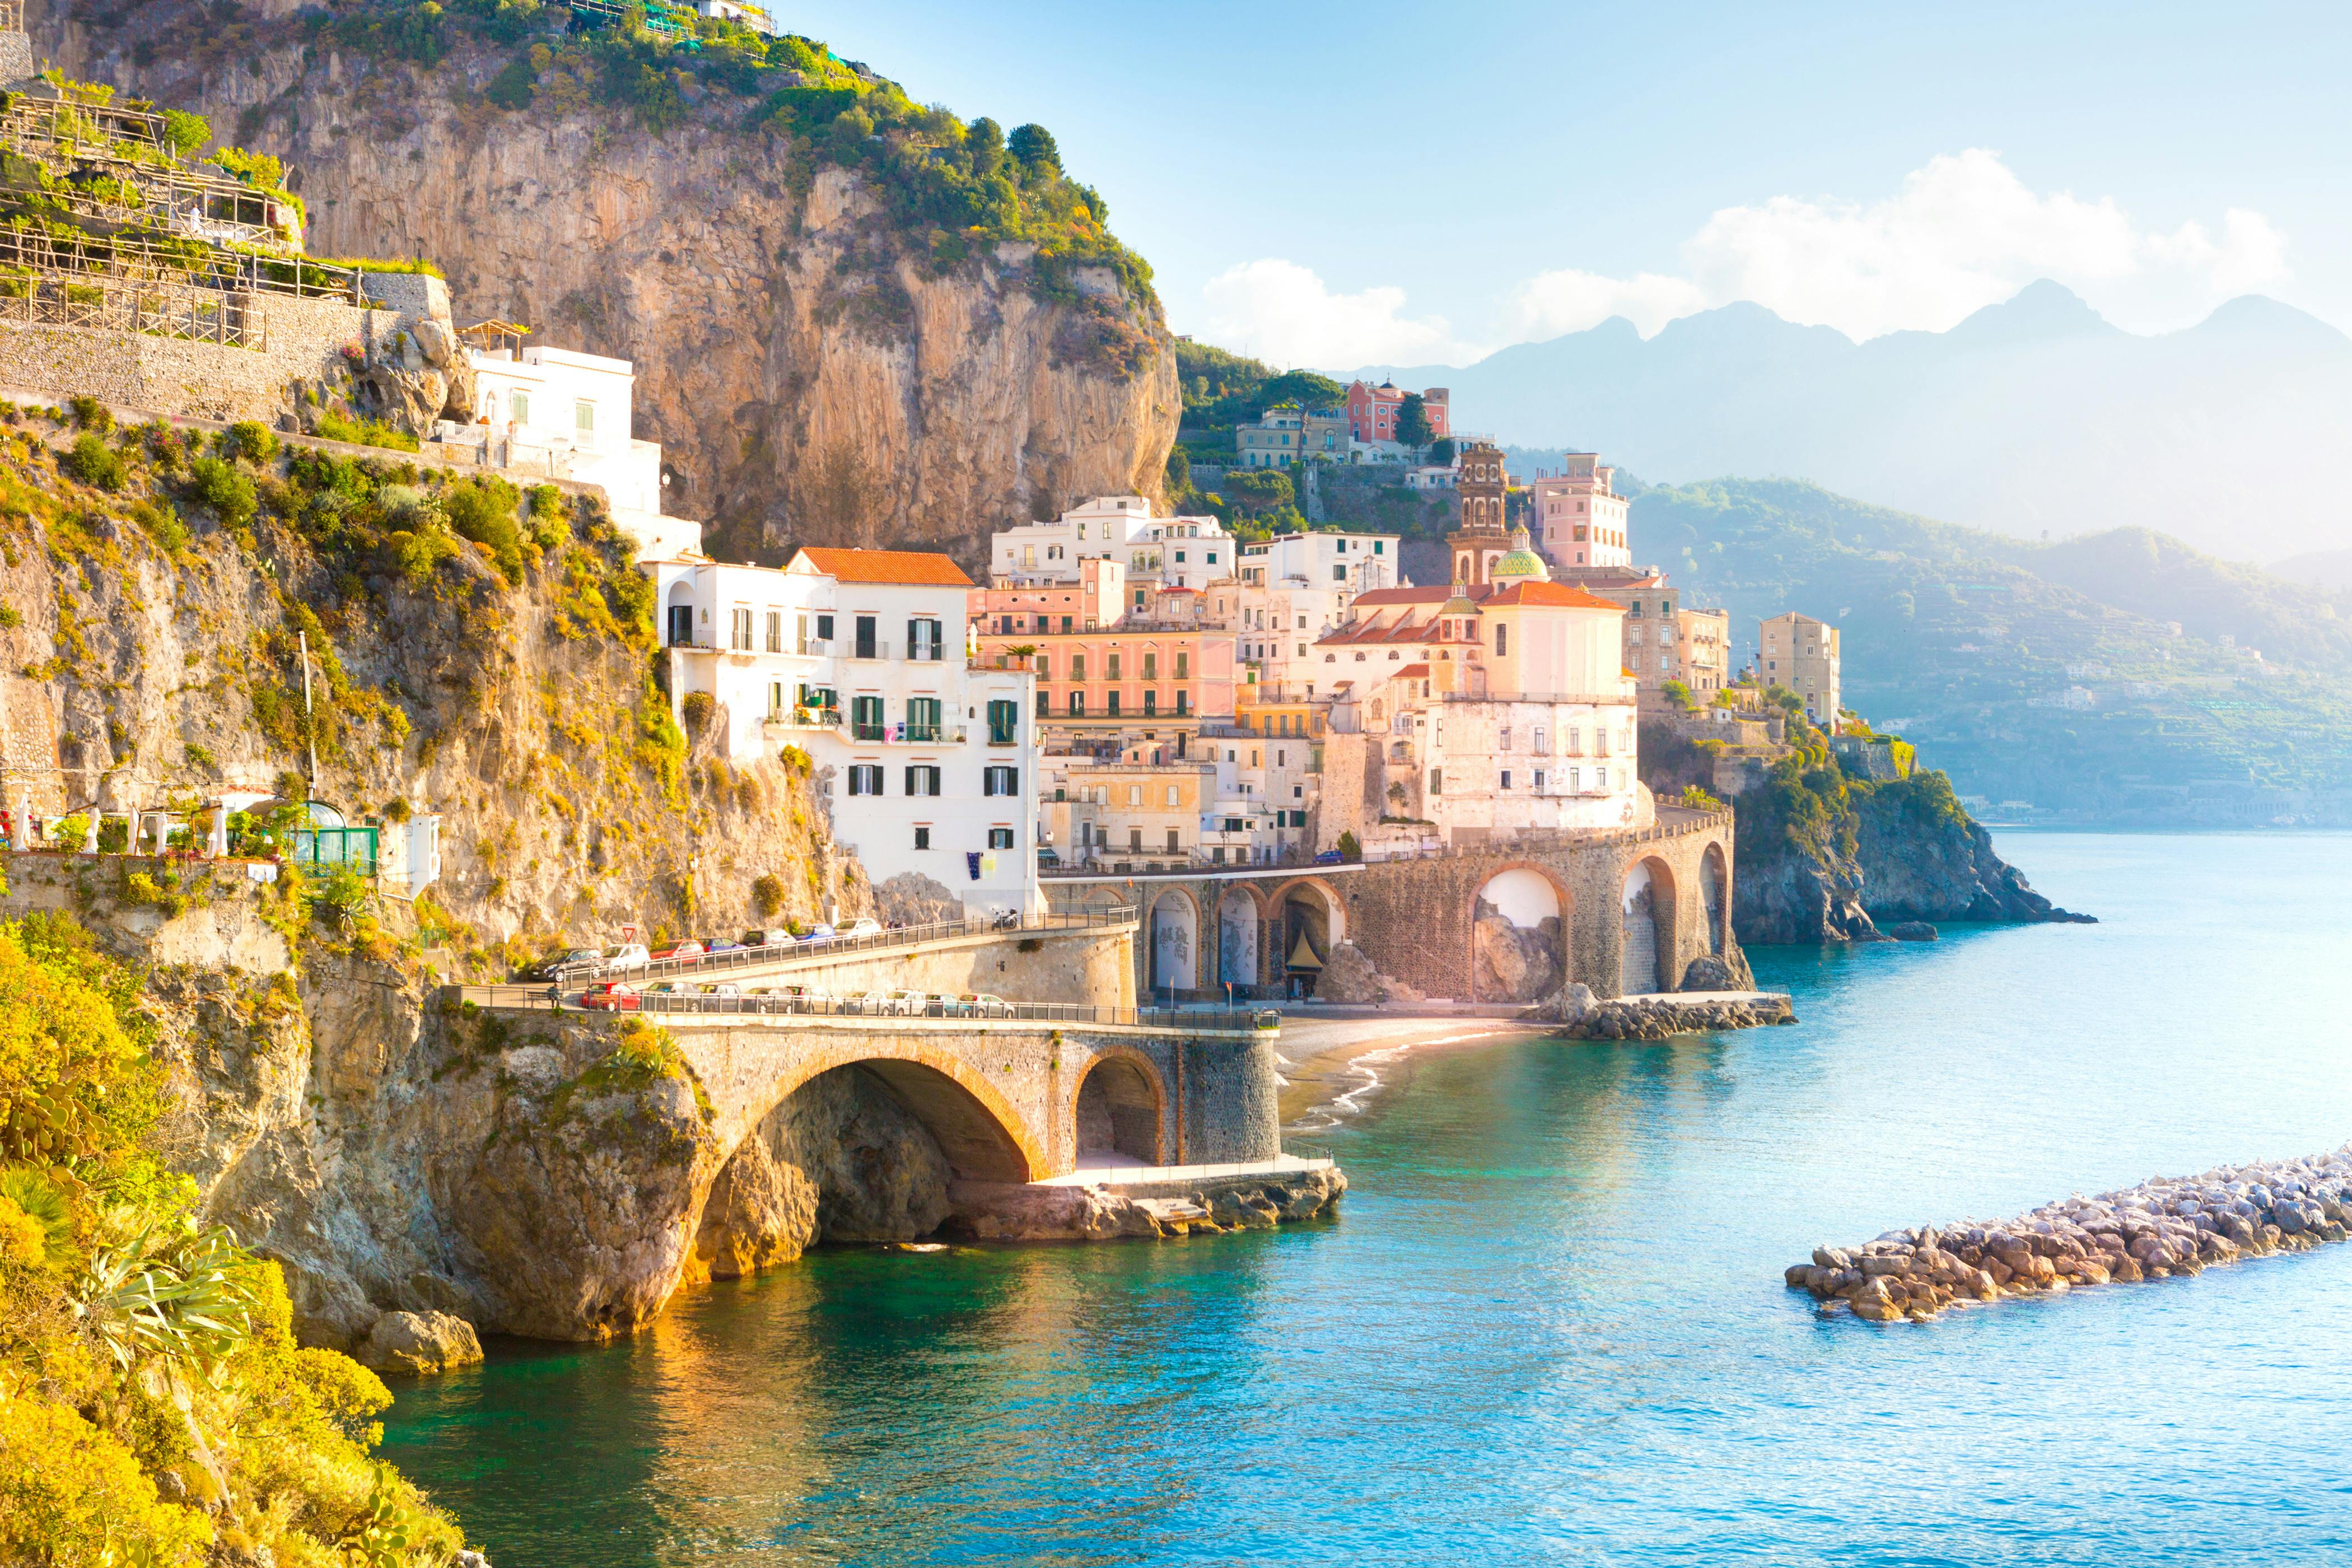 Discover Amalfi Coast on a private boat excursion from Amalfi